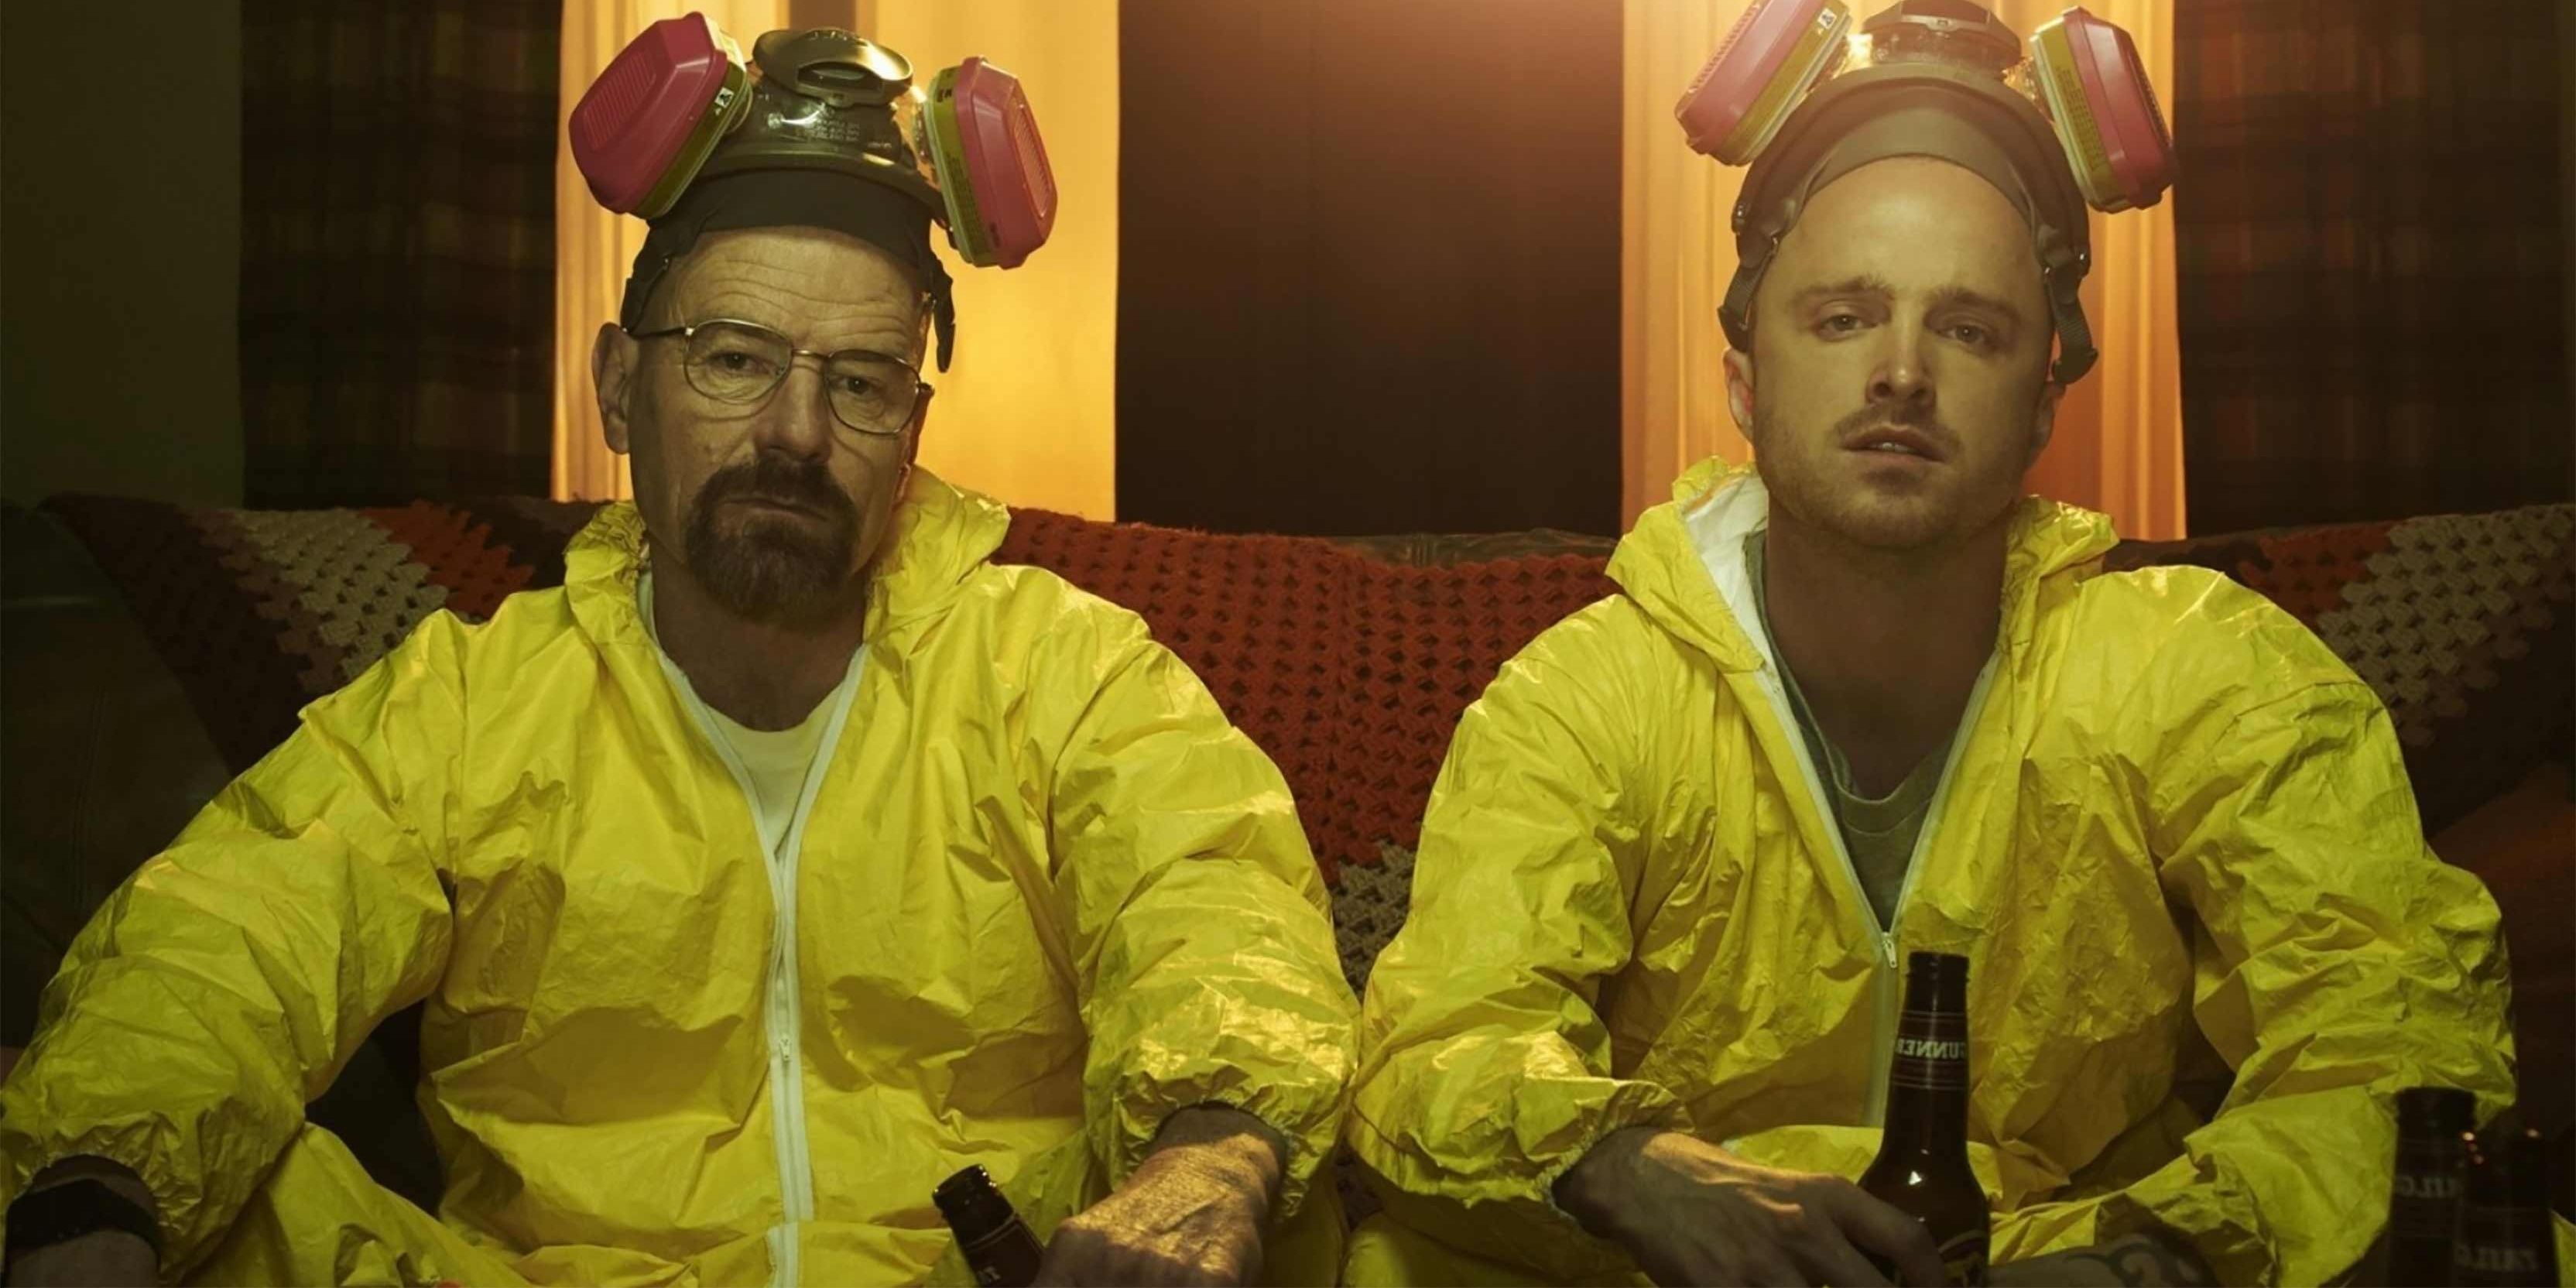 Aaron Paul and Bryan Cranston in Breaking Bad wear a yellow hazmat suit and drink beer 